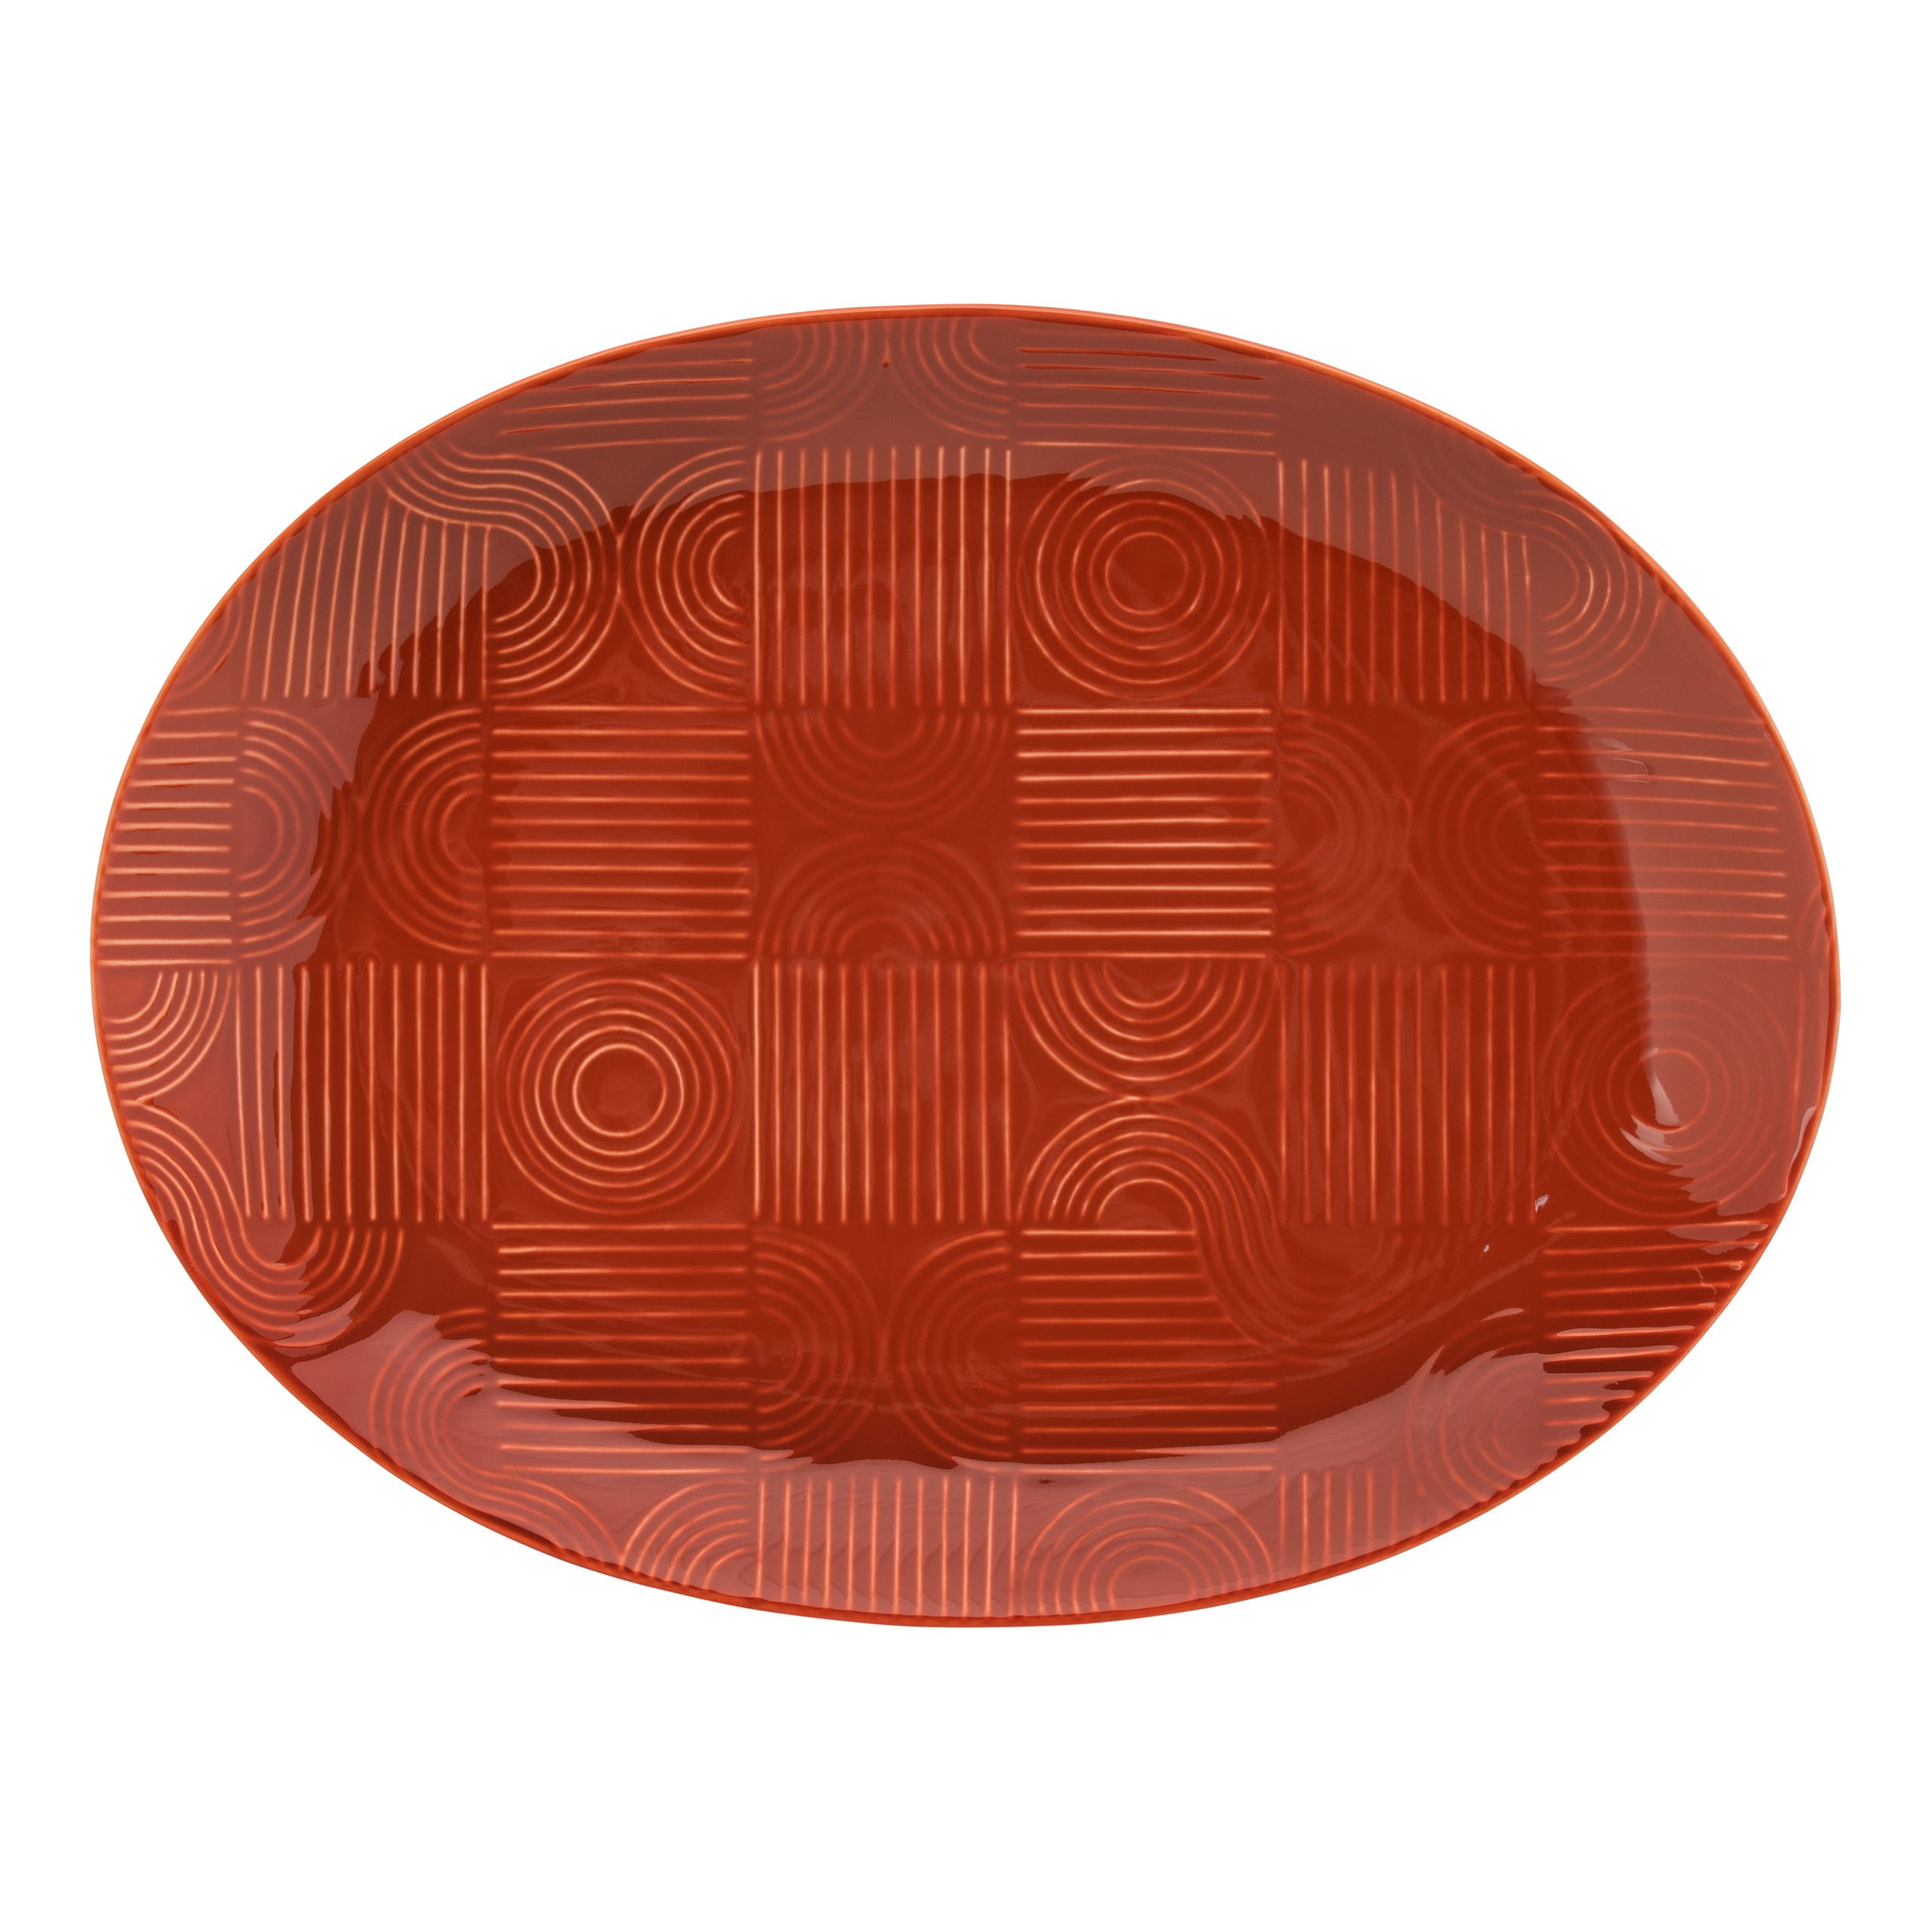 ARC Platte oval, 36 x 27 cm, Terracotta, Keramik, in Geschenkbox